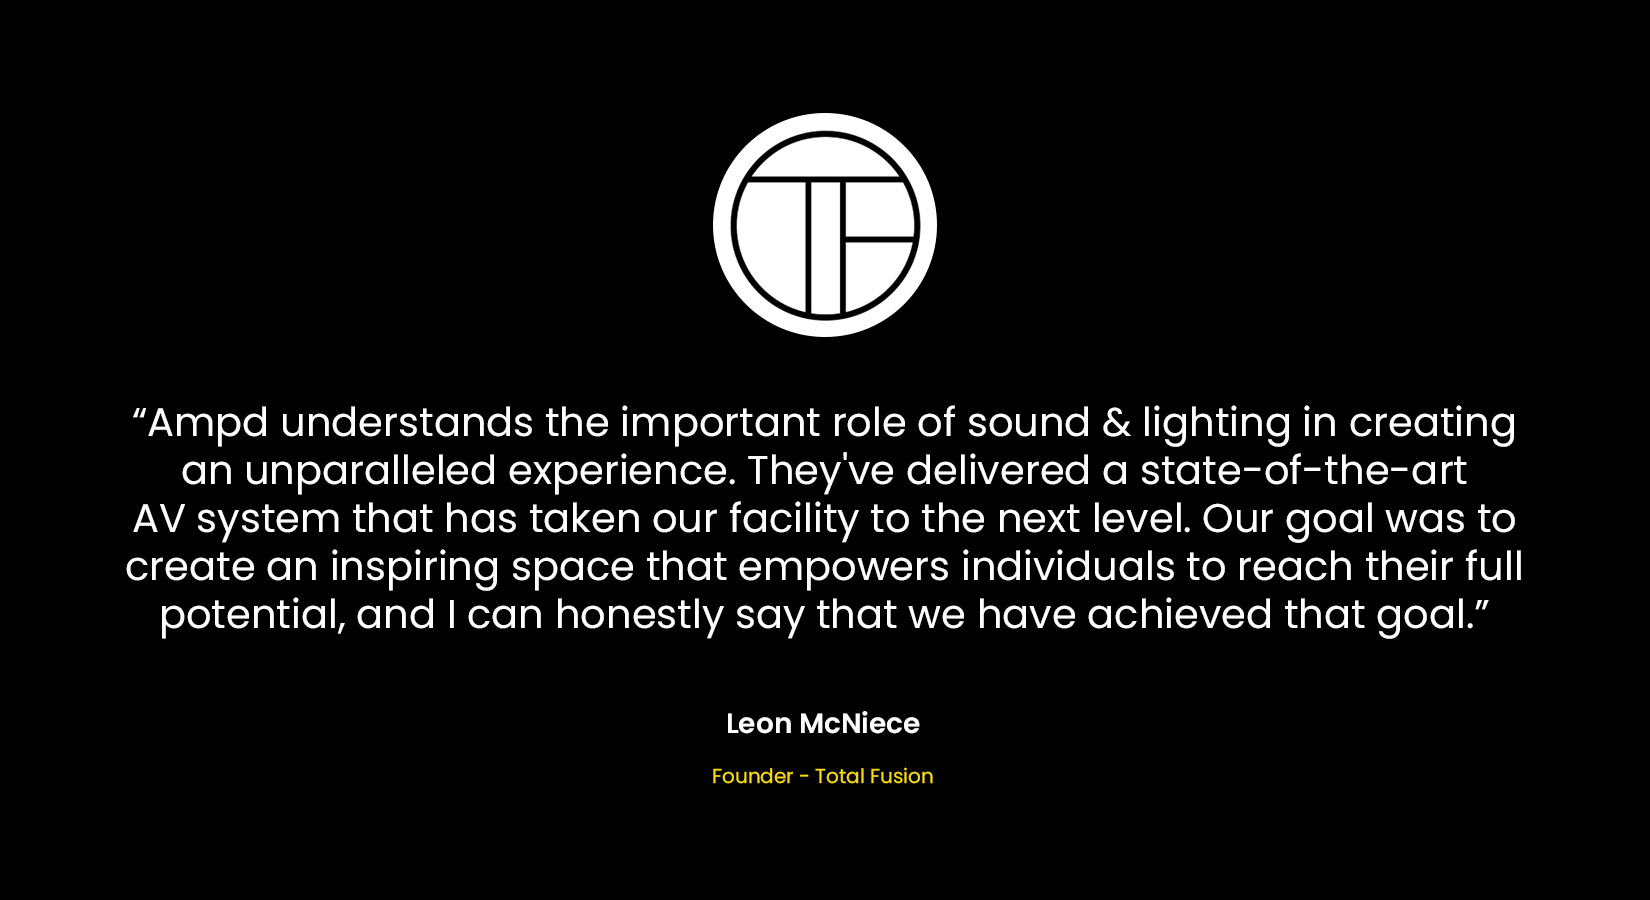 Leon McNiece Total Fusion Testimonial for Ampd Electronics Audio Visual